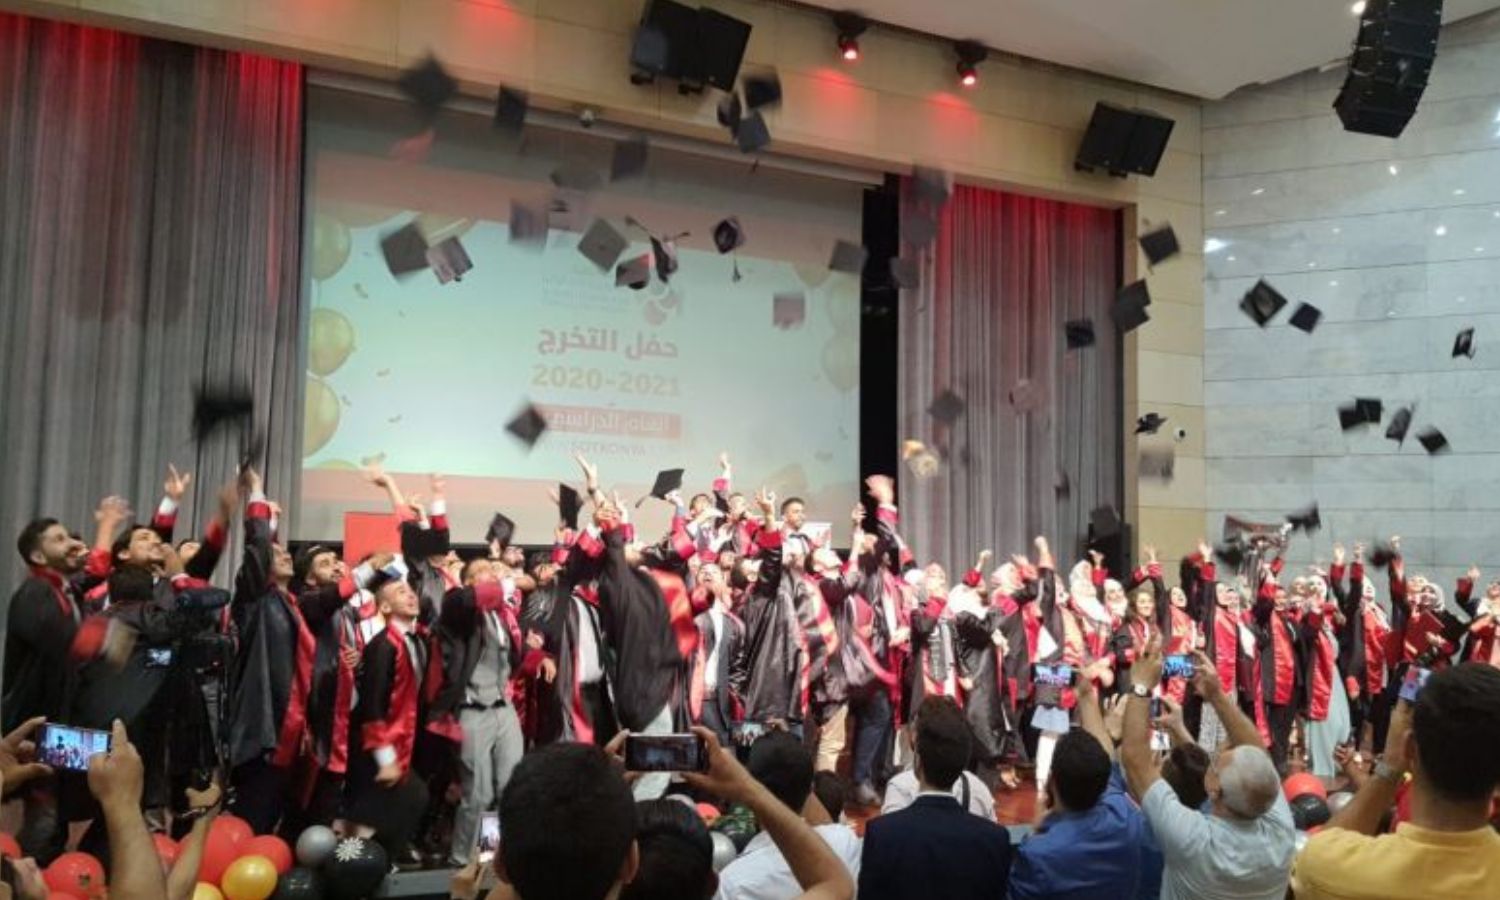 Syrian students’ graduation ceremony at the Turkey-based Gaziantep University